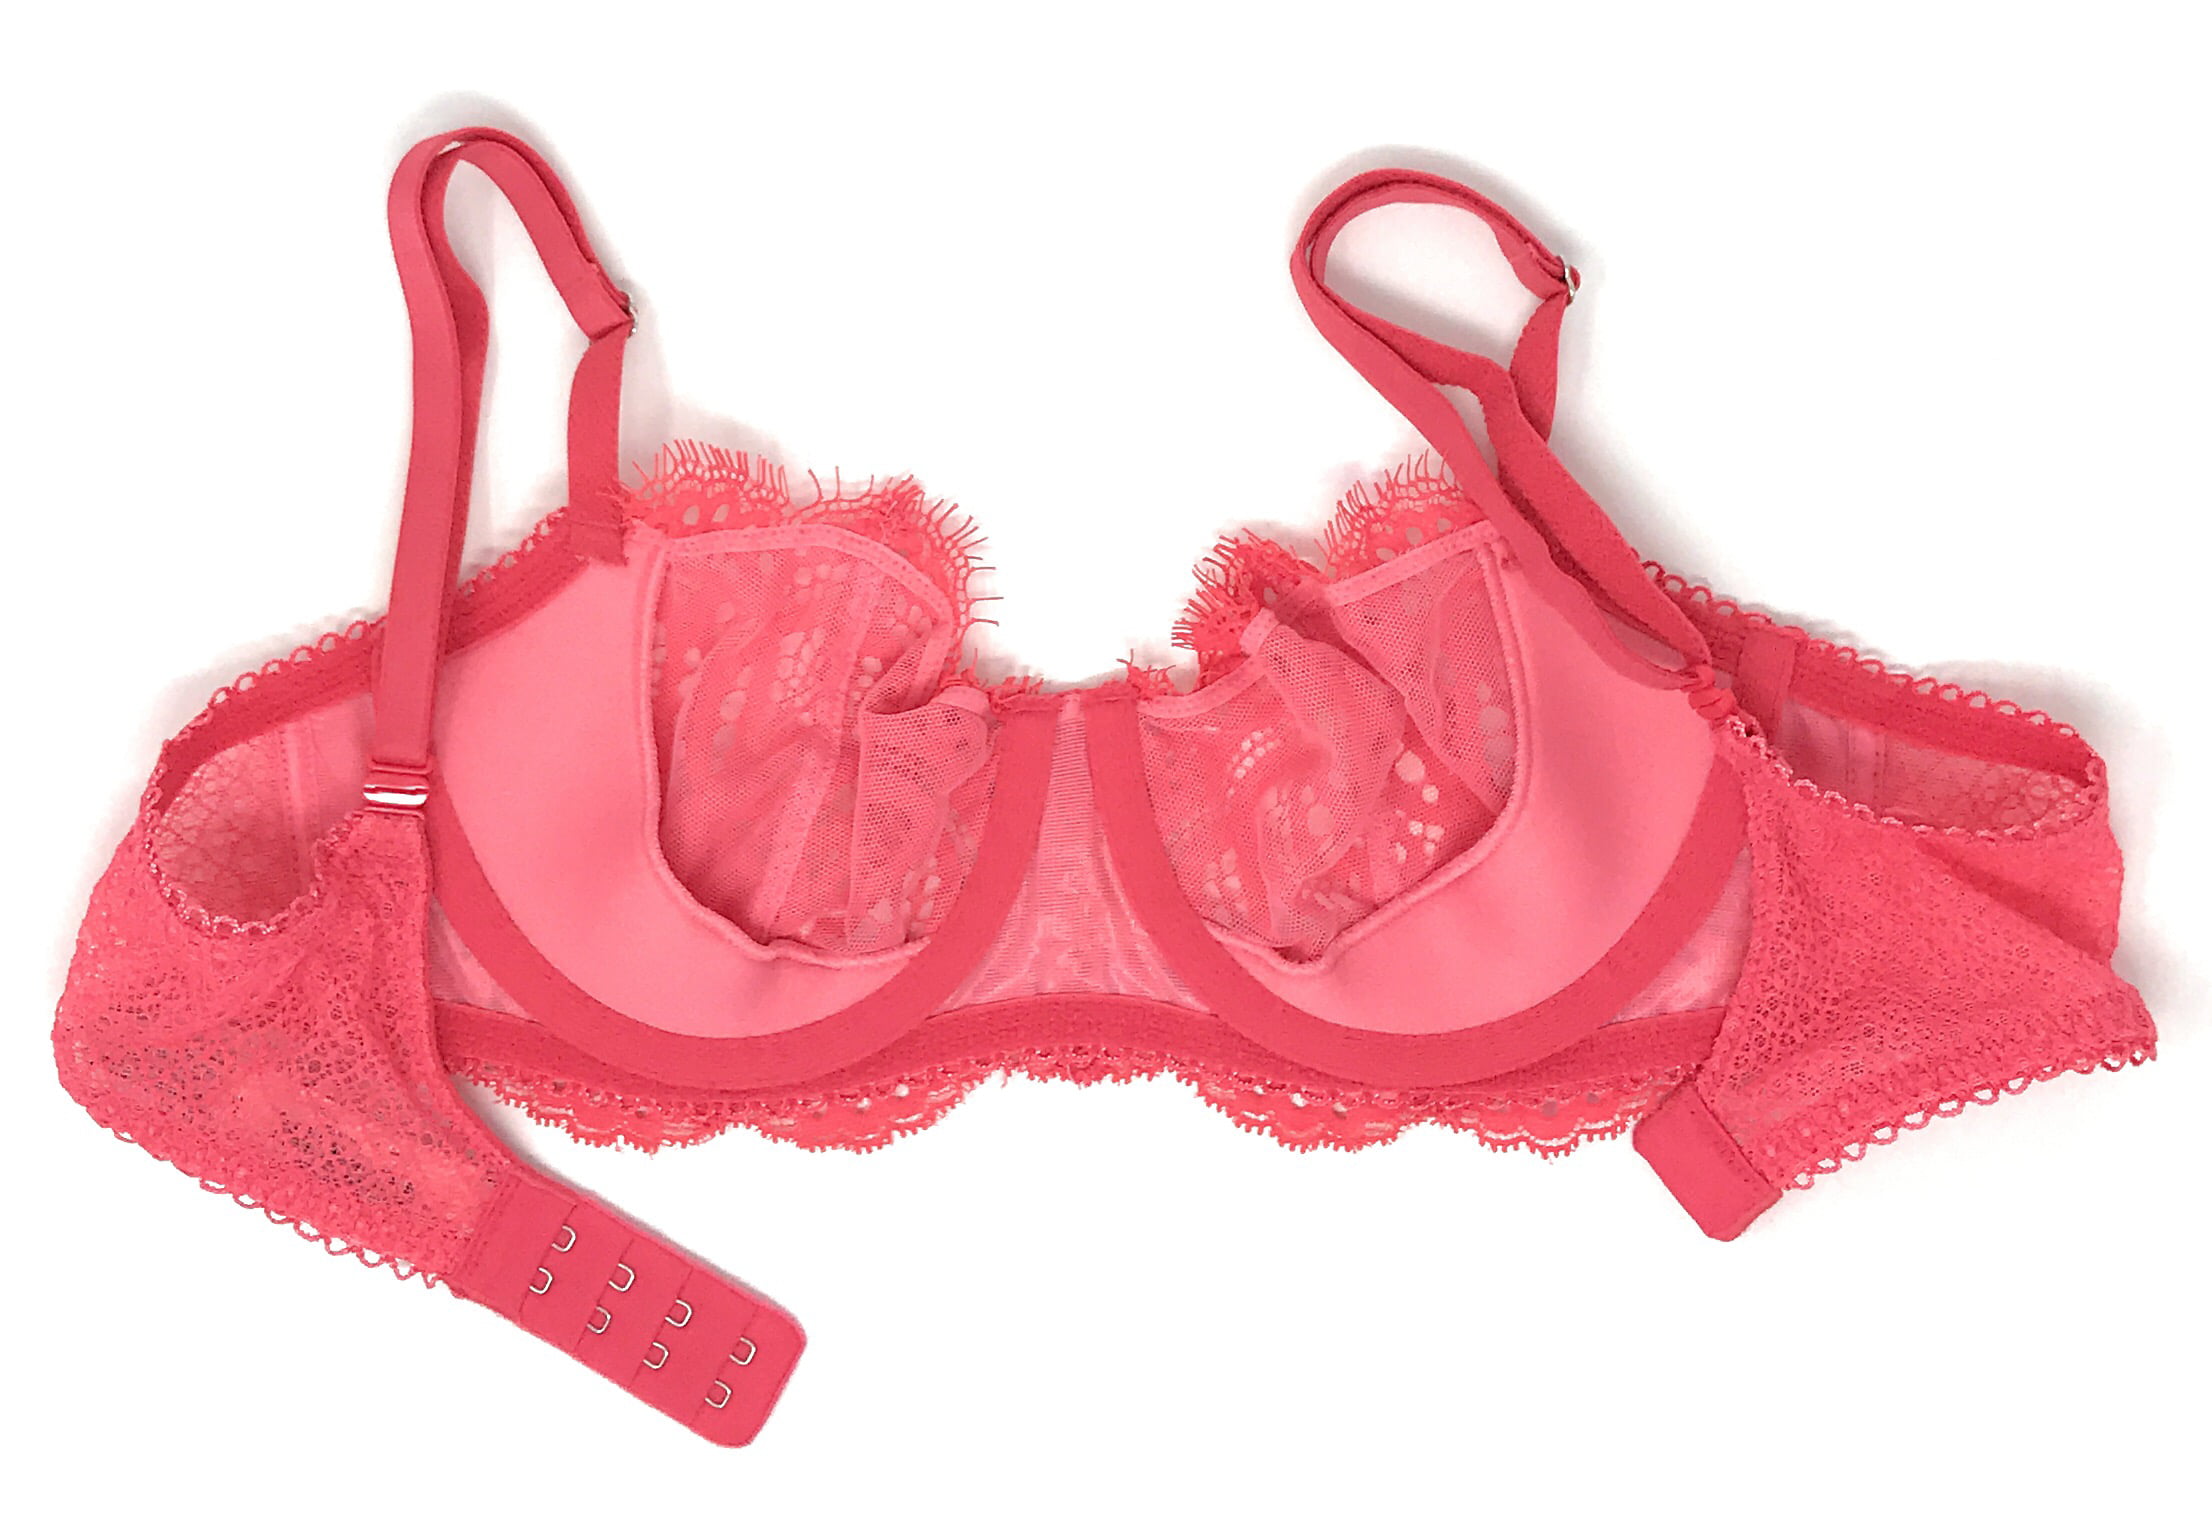 Victoria's Secret, Intimates & Sleepwear, Victorias Secret Dream Angels  Lined Demi Lace Bra 32dd Pink Underwire B87